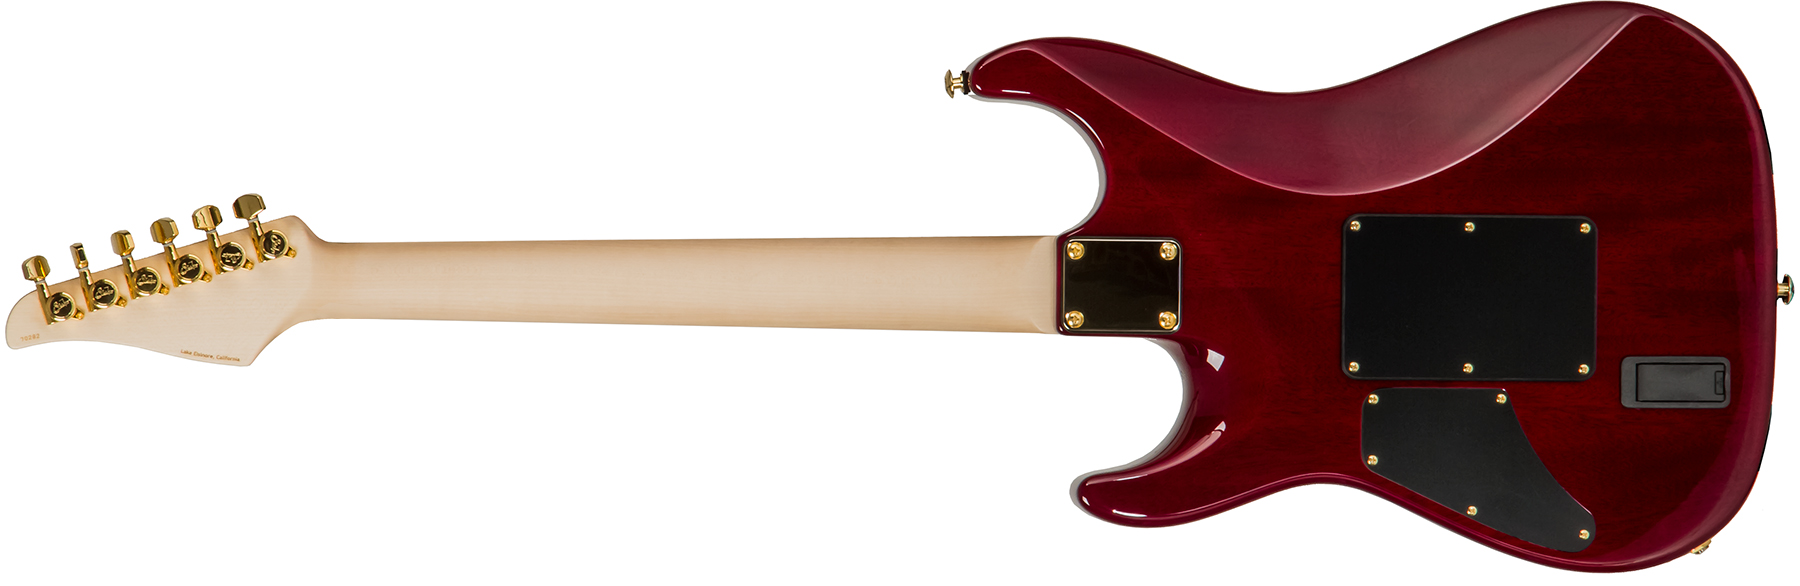 Suhr Standard Legacy 01-ltd-0030 Hss Emg Fr Rw #70282 - Aged Cherry Burst - Guitare Électrique Forme Str - Variation 1